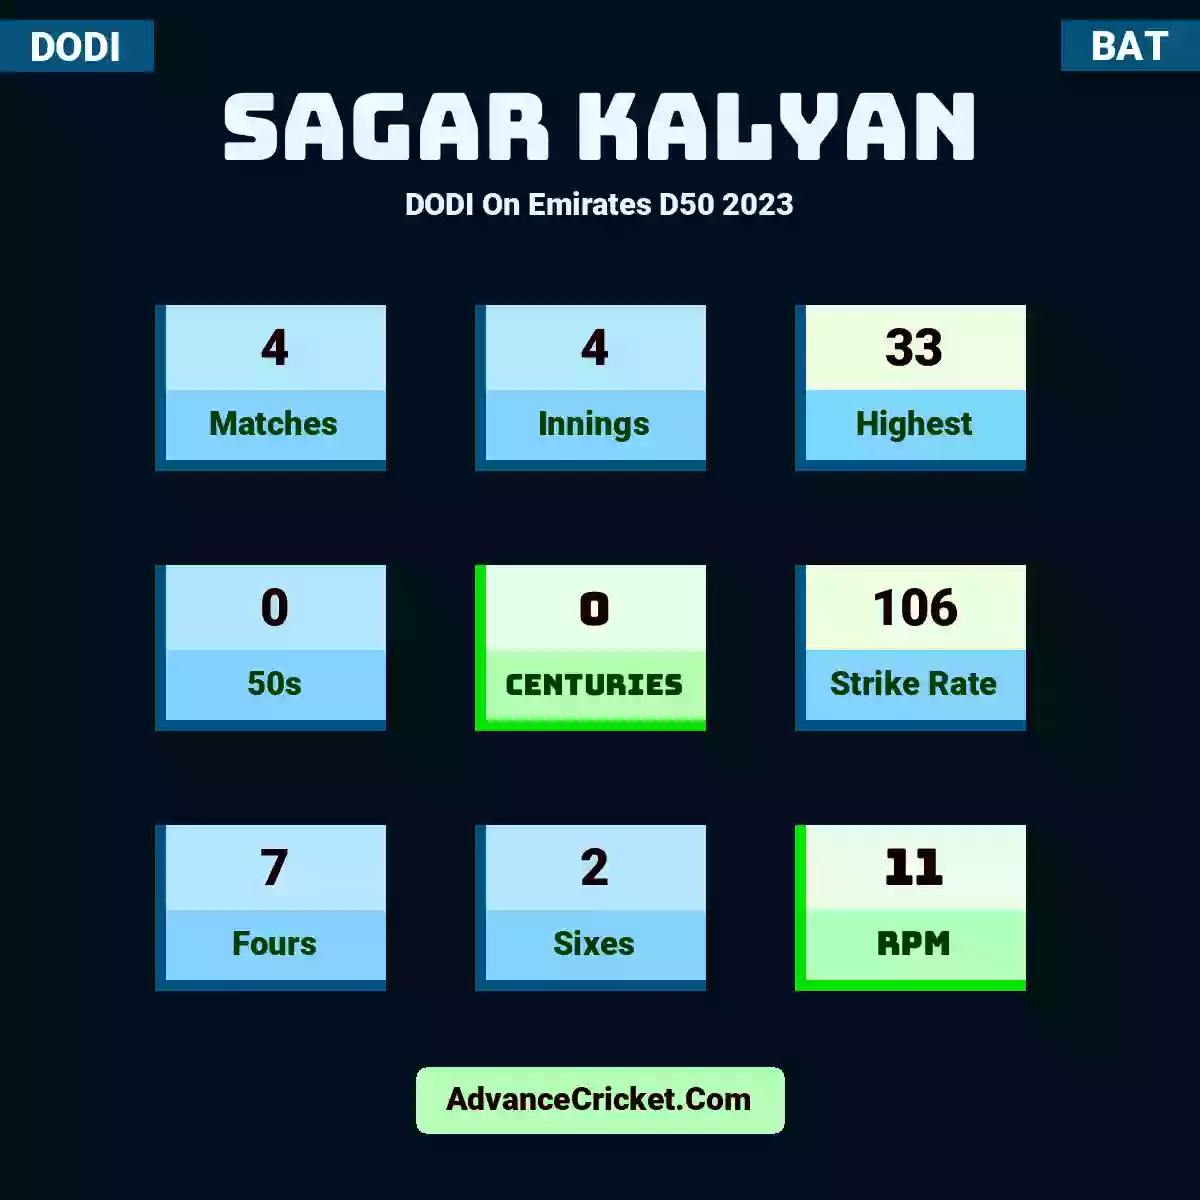 Sagar Kalyan DODI  On Emirates D50 2023, Sagar Kalyan played 4 matches, scored 33 runs as highest, 0 half-centuries, and 0 centuries, with a strike rate of 106. S.Kalyan hit 7 fours and 2 sixes, with an RPM of 11.